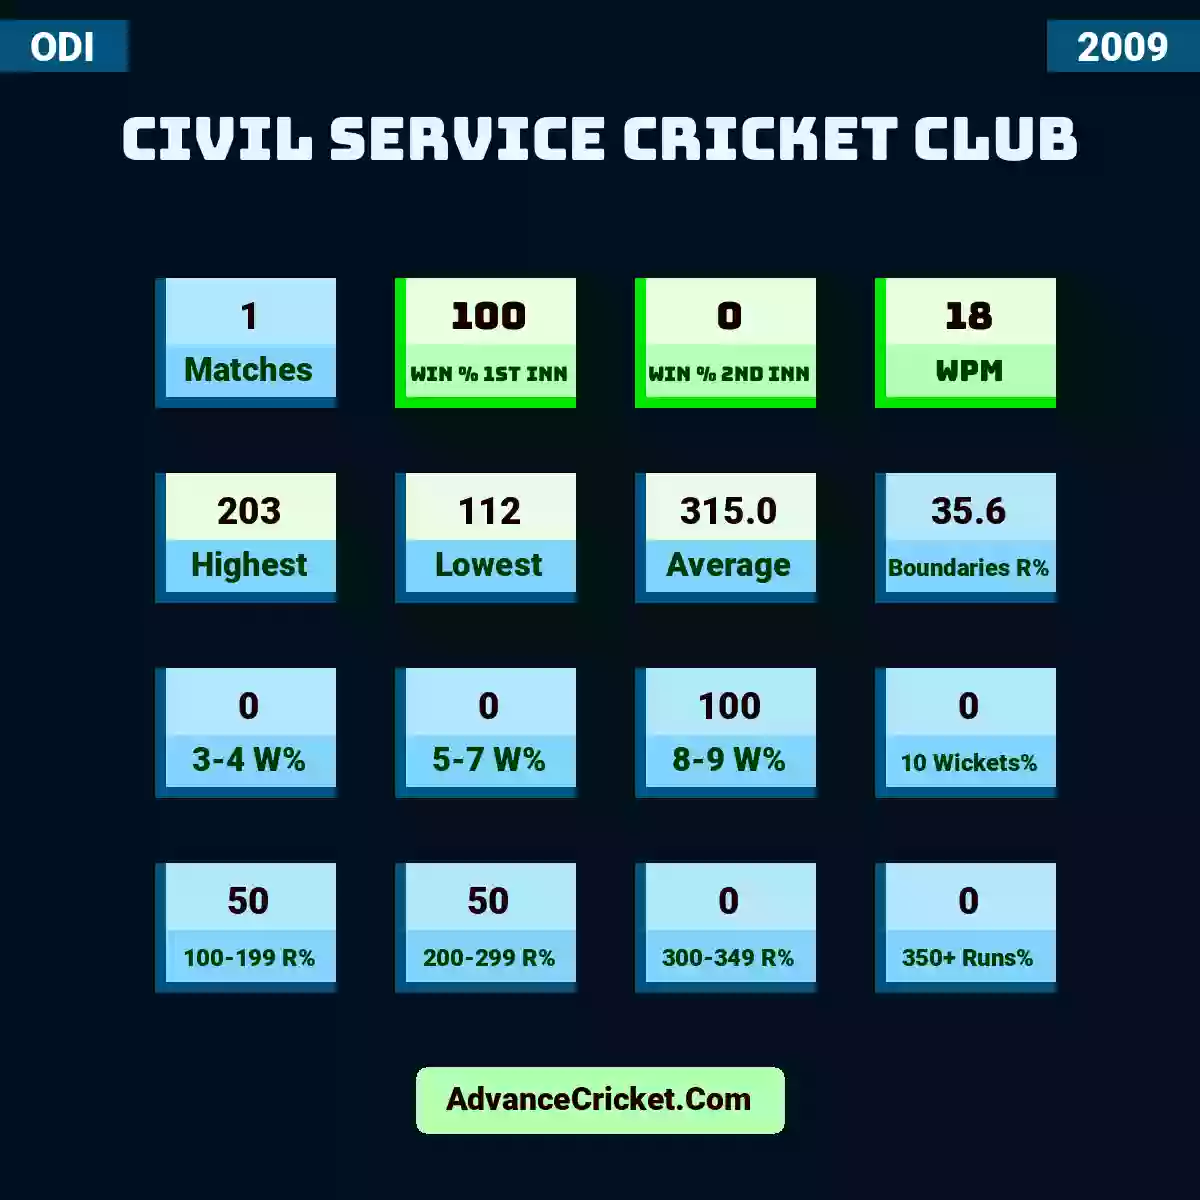 Image showing Civil Service Cricket Club with Matches: 1, Win % 1st Inn: 100, Win % 2nd Inn: 0, WPM: 18, Highest: 203, Lowest: 112, Average: 315.0, Boundaries R%: 35.6, 3-4 W%: 0, 5-7 W%: 0, 8-9 W%: 100, 10 Wickets%: 0, 100-199 R%: 50, 200-299 R%: 50, 300-349 R%: 0, 350+ Runs%: 0.